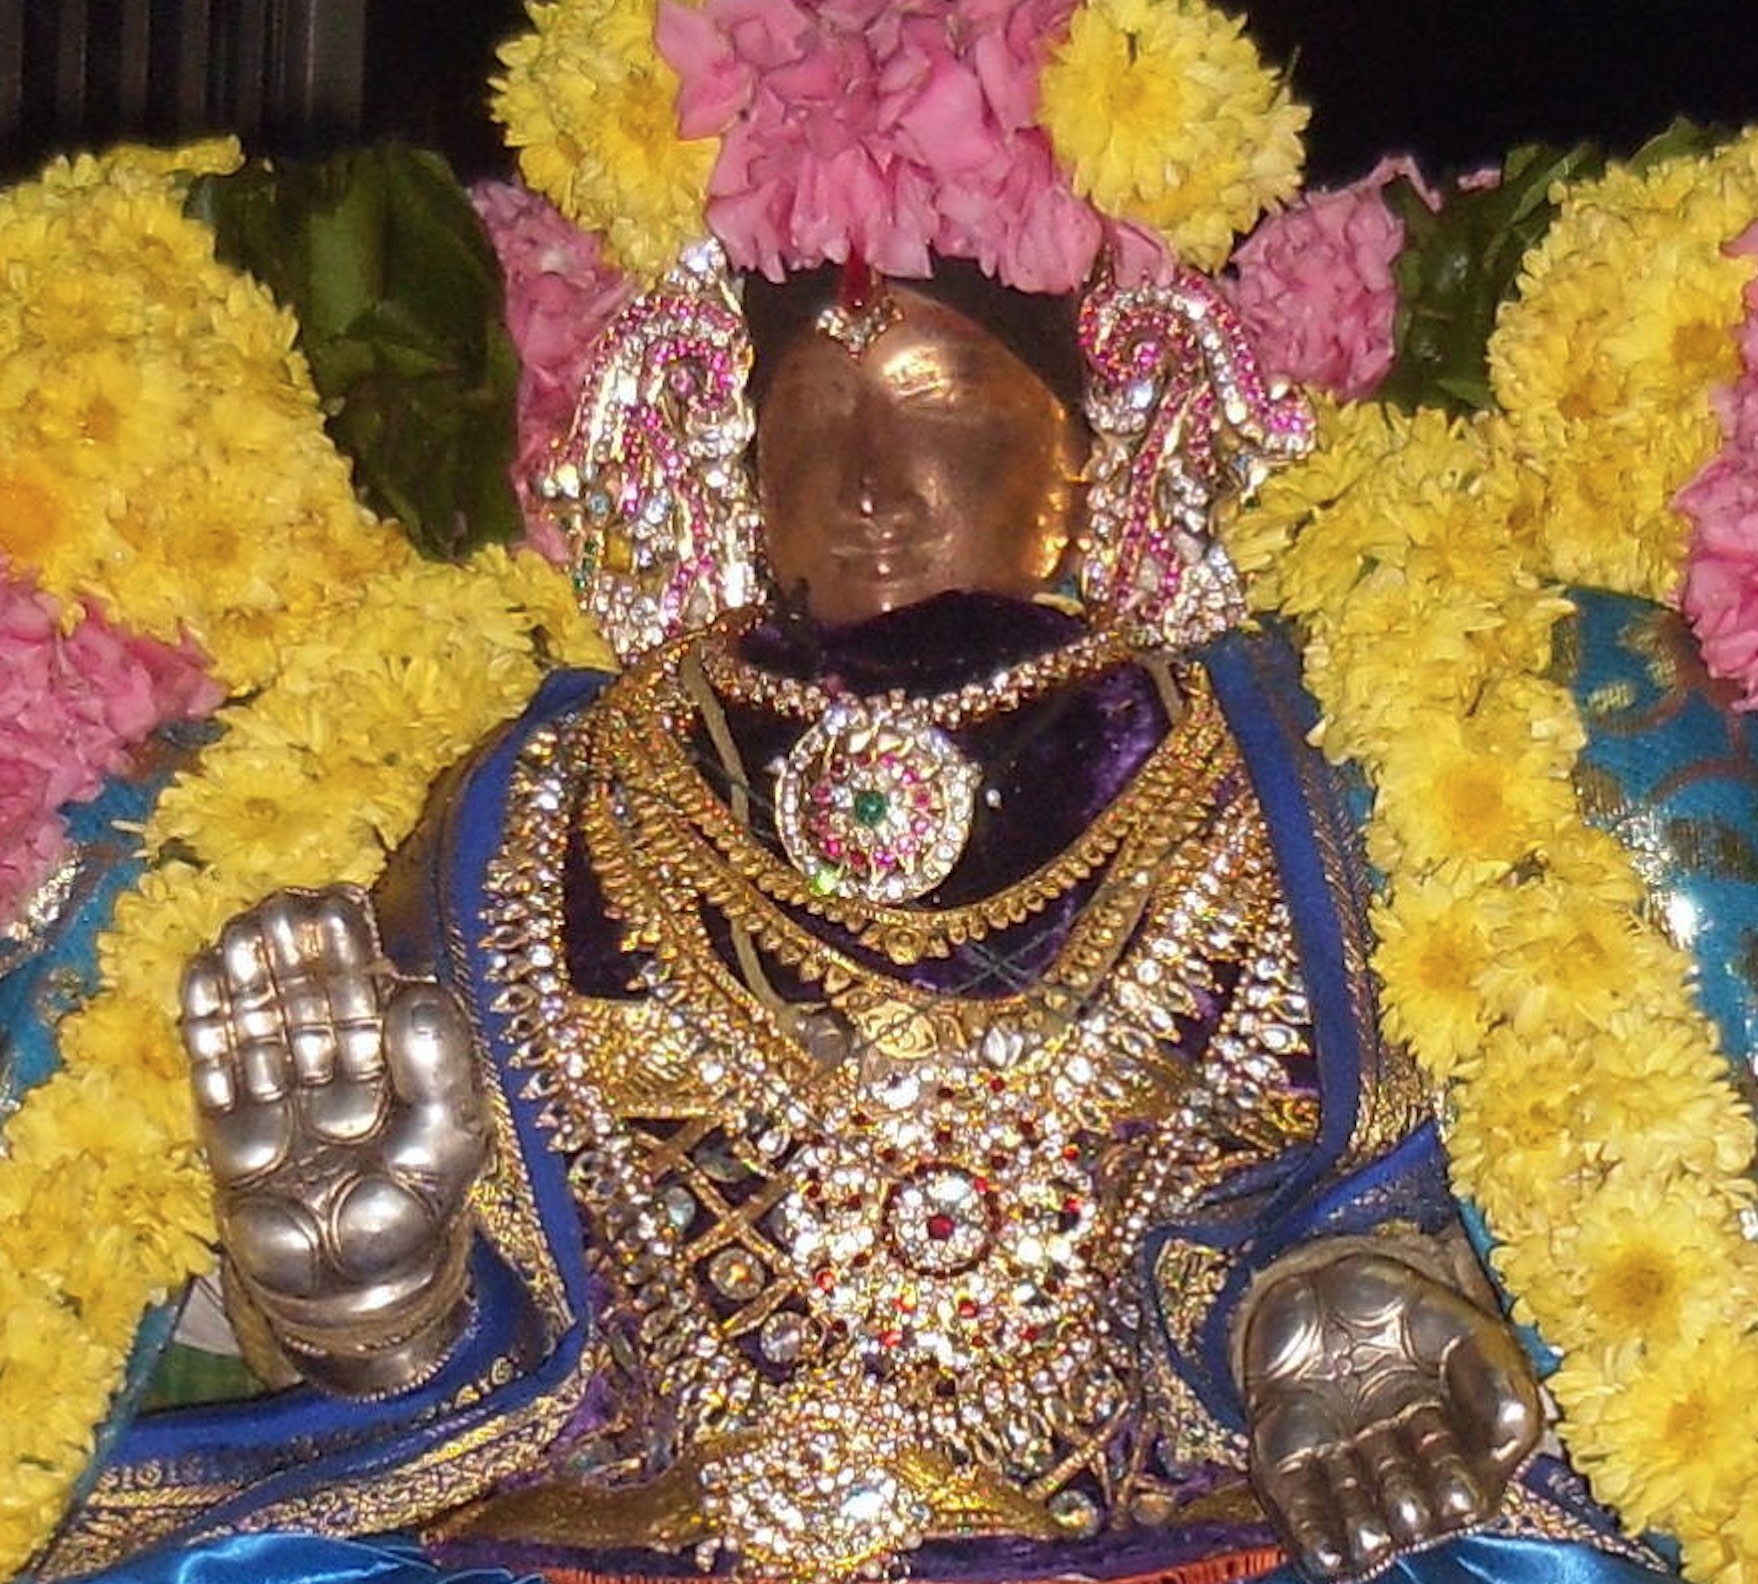 Thirukannamangai Abhishekavalli Thayar Thai Velli purappadu 2015